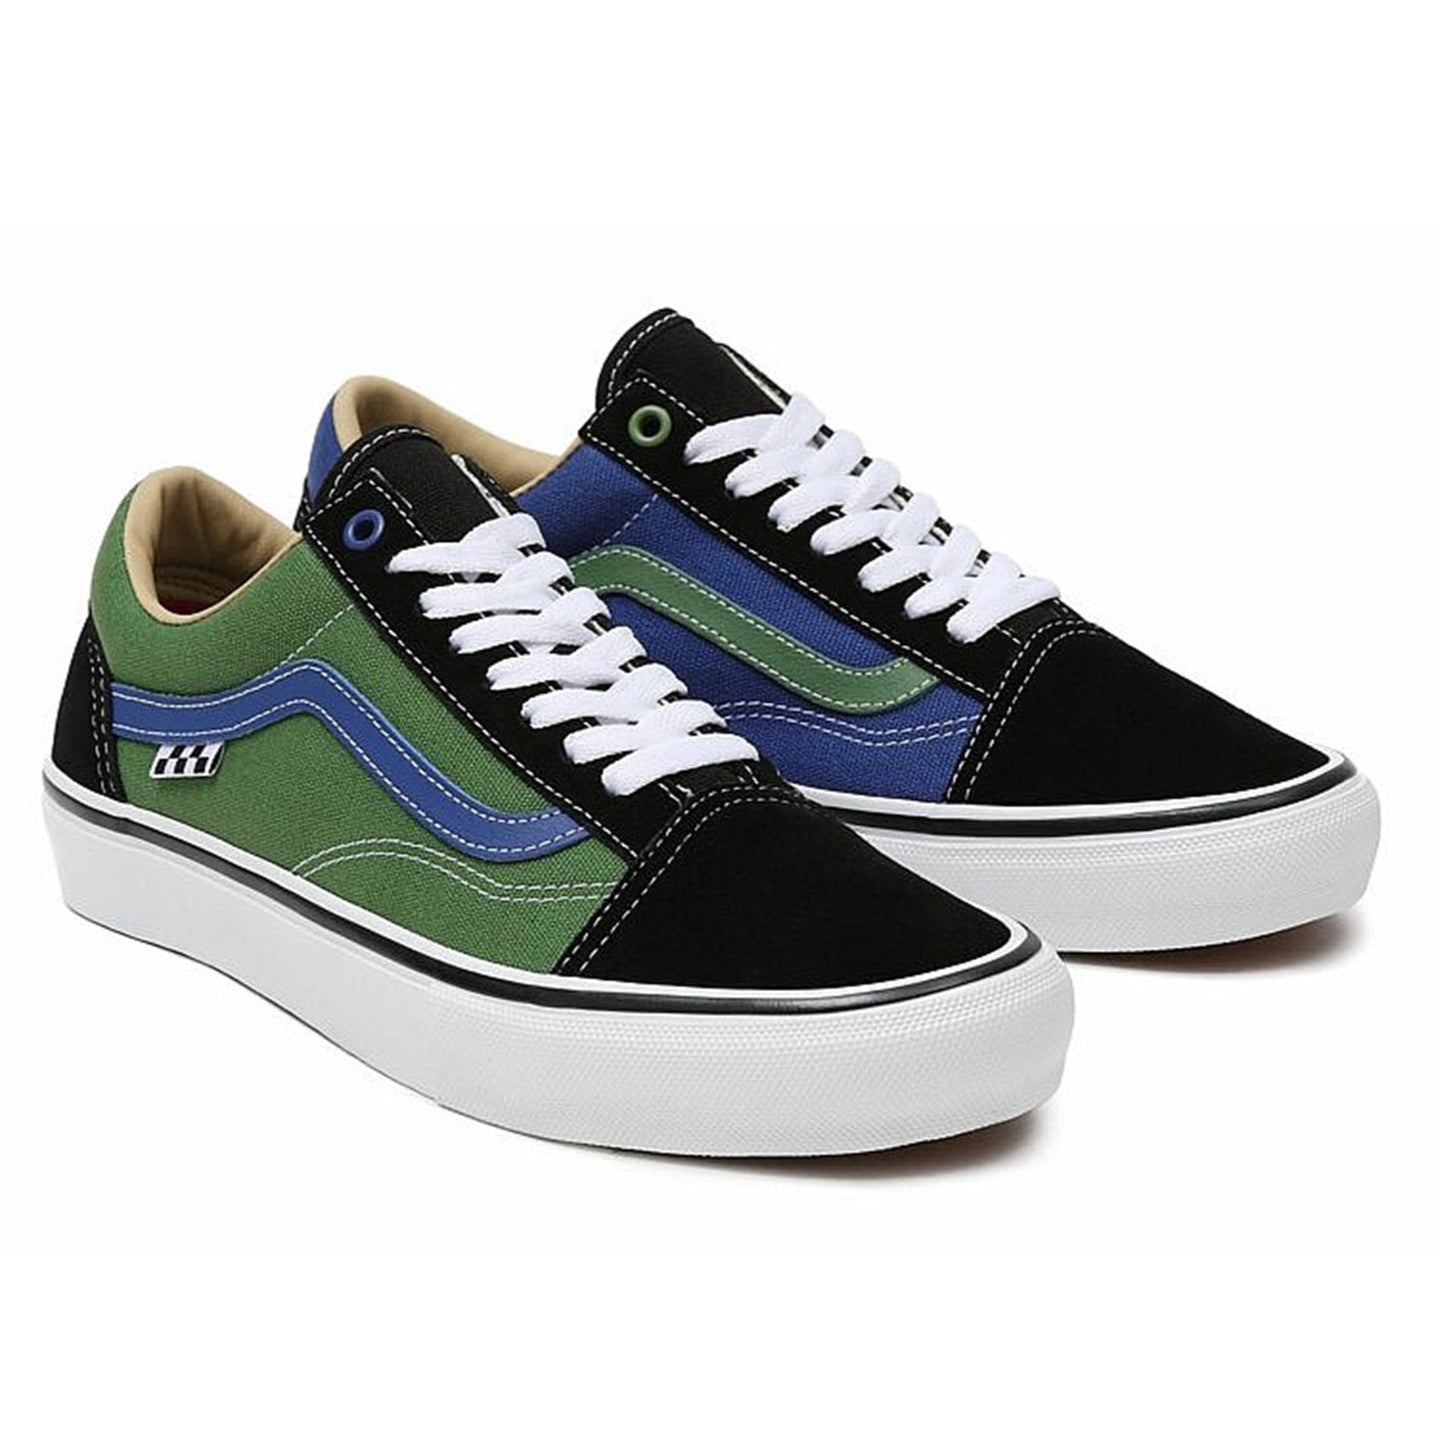 Vans - Skate Old Skool - University Green/Blue